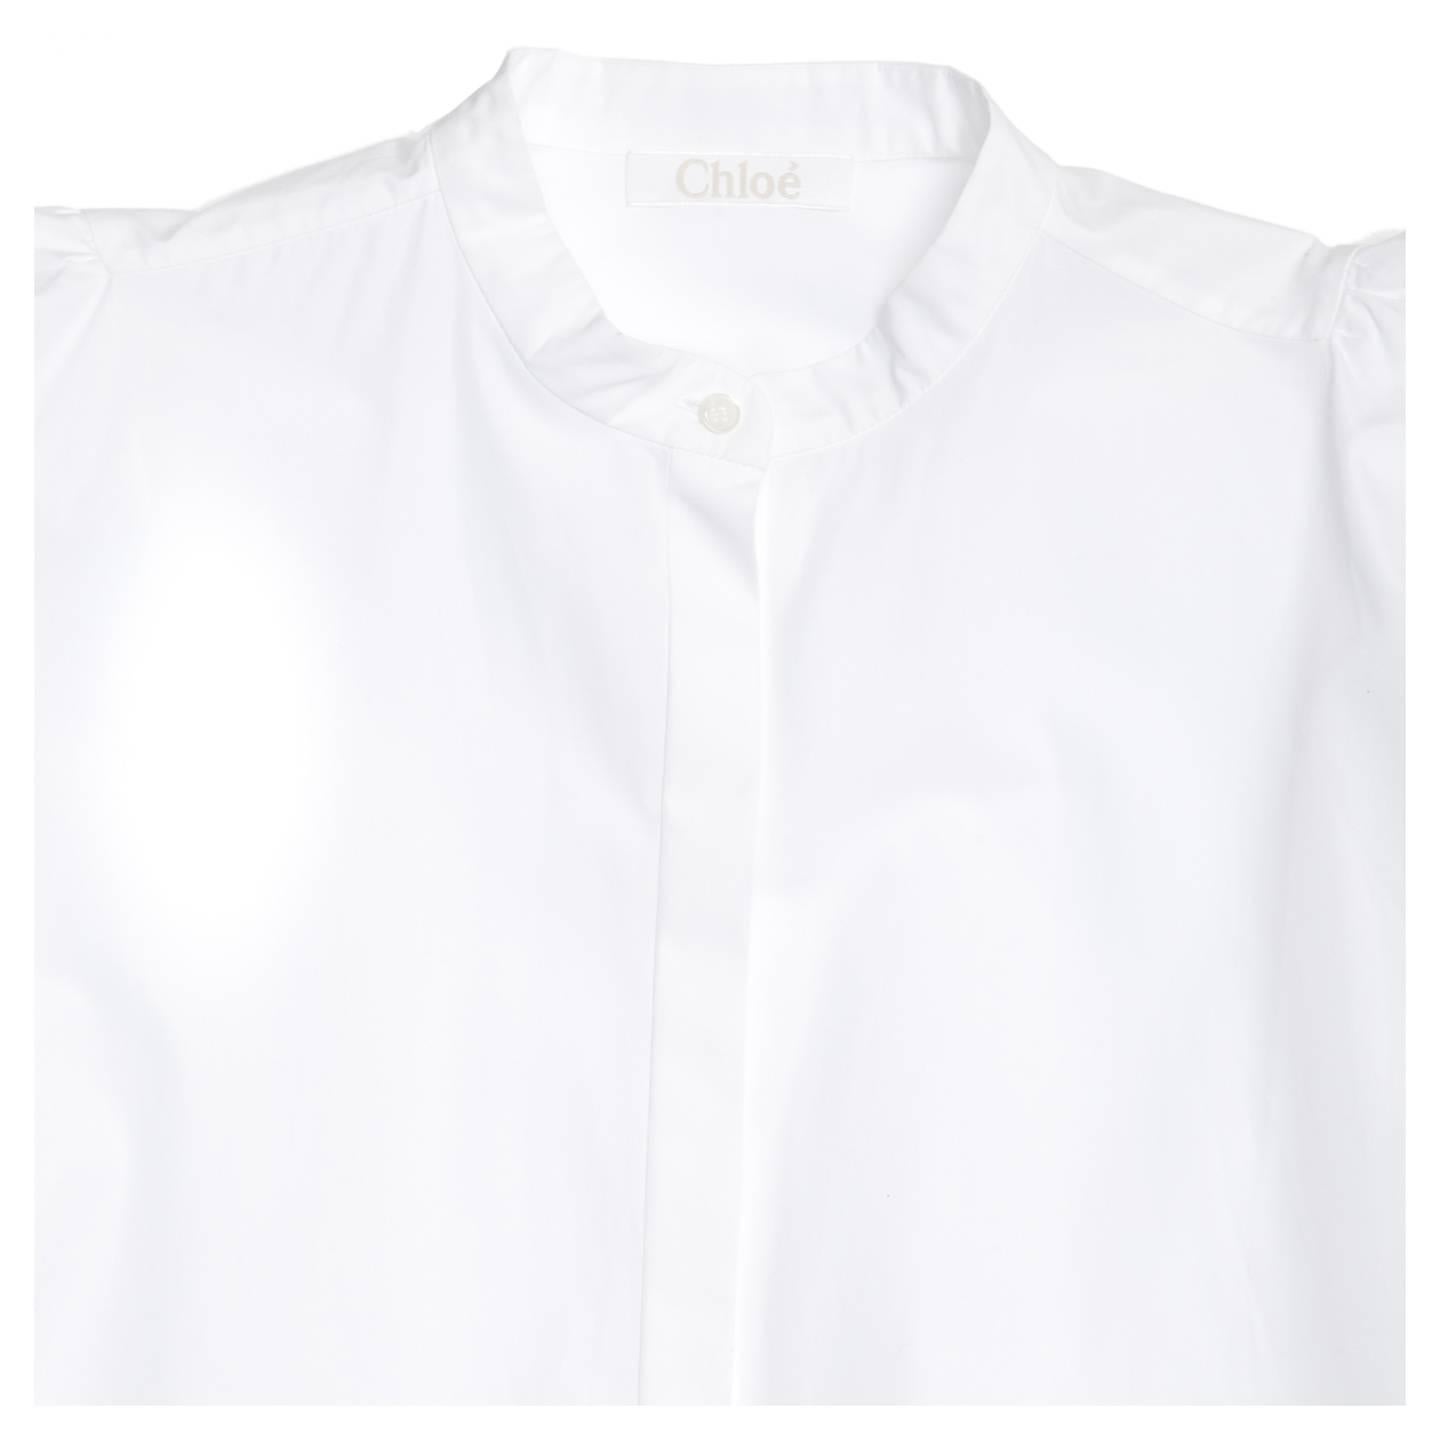 Gray Chloe' White Cotton Dress For Sale